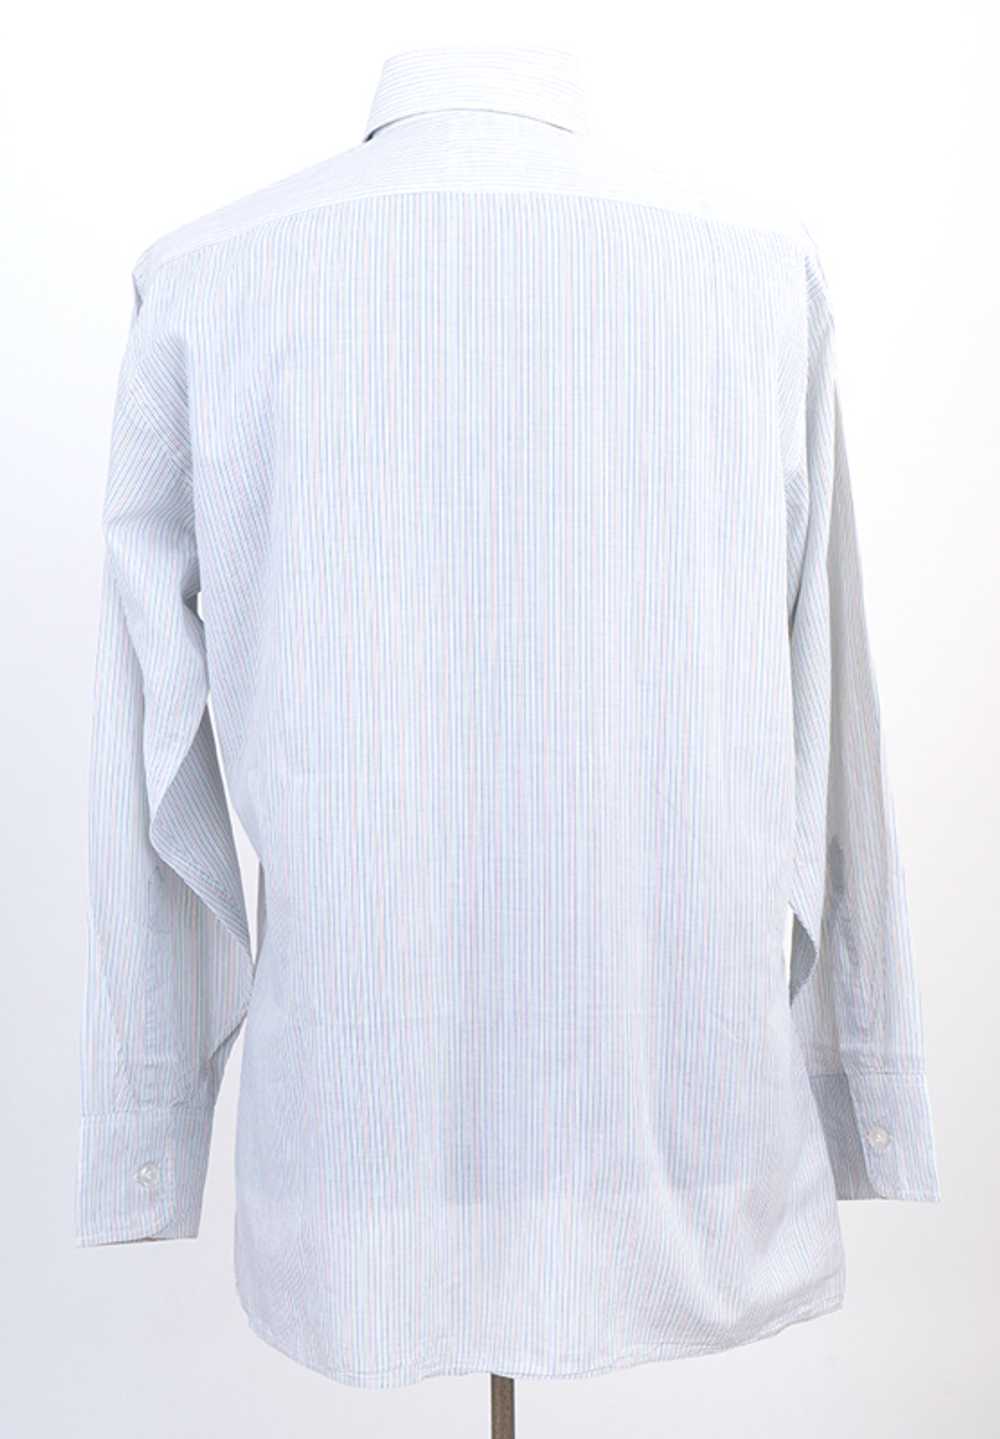 Mod Pierre Cardin 60s Shirt - image 2